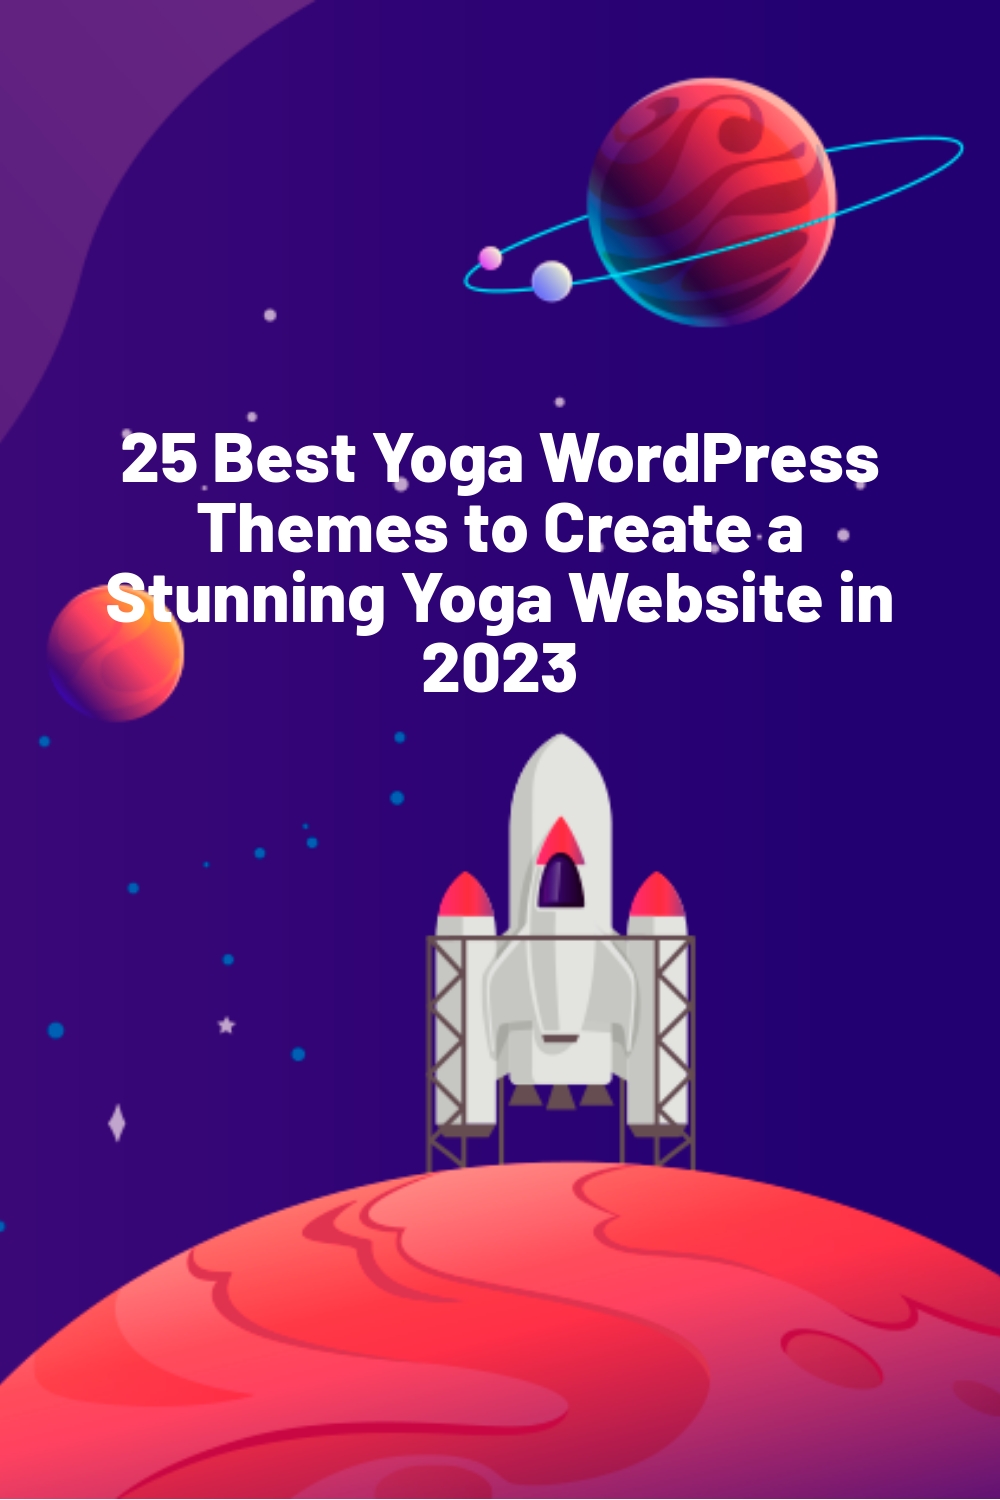 25 Best Yoga WordPress Themes to Create a Stunning Yoga Website in 2023